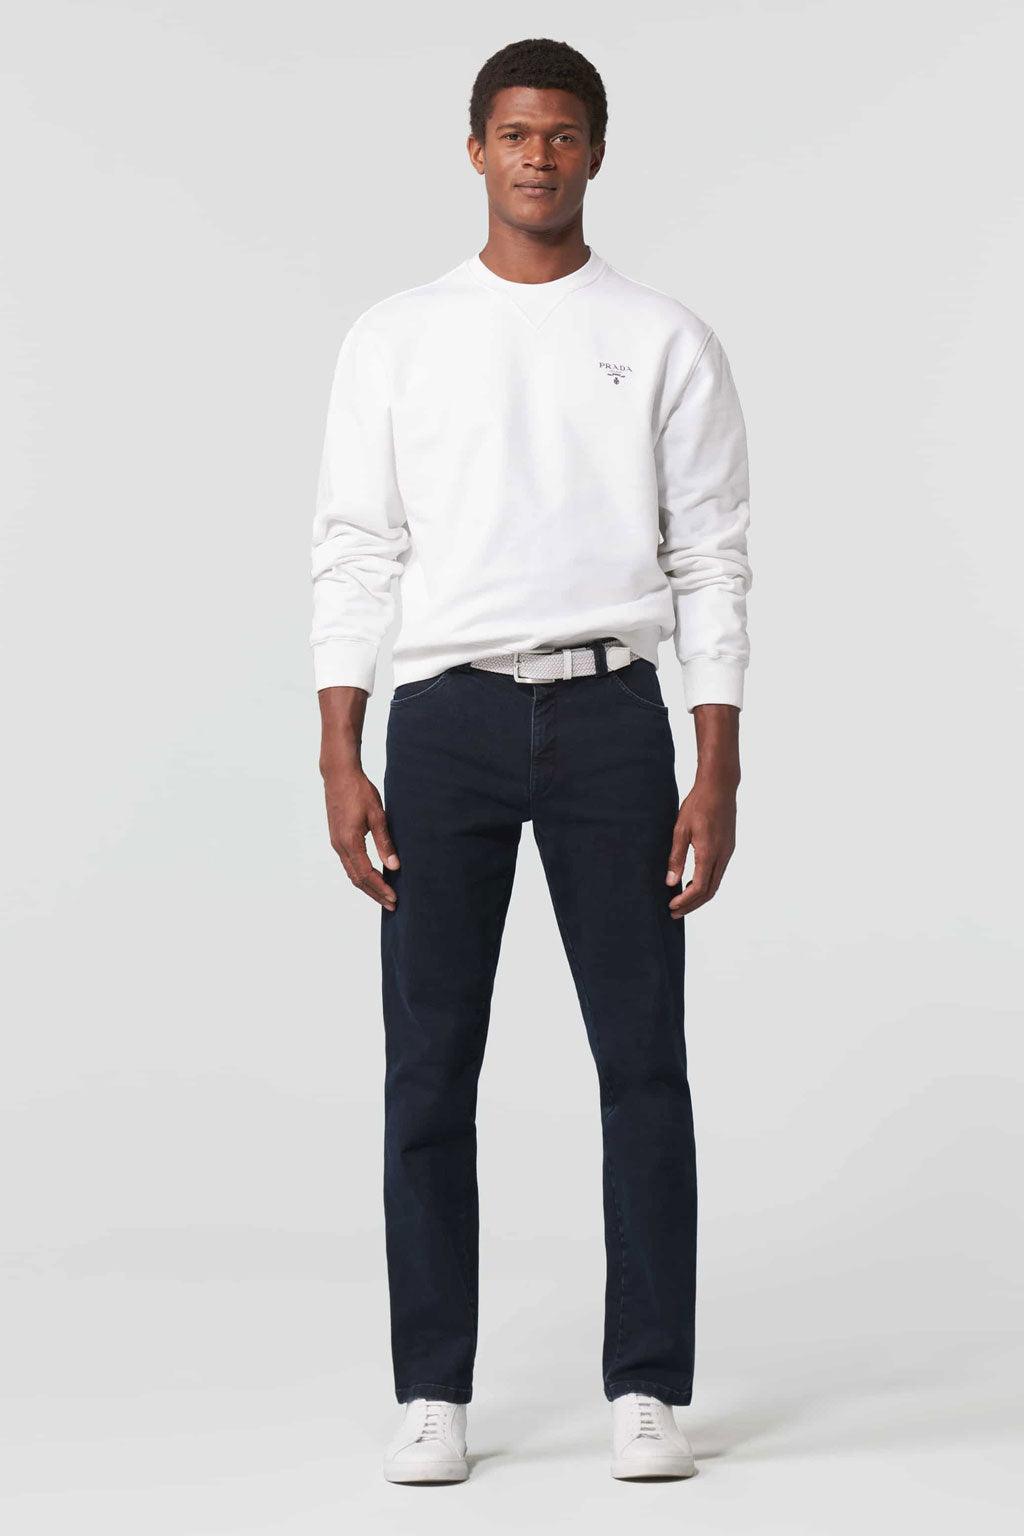 Meyer jeans - Big Boss | the menswear concept